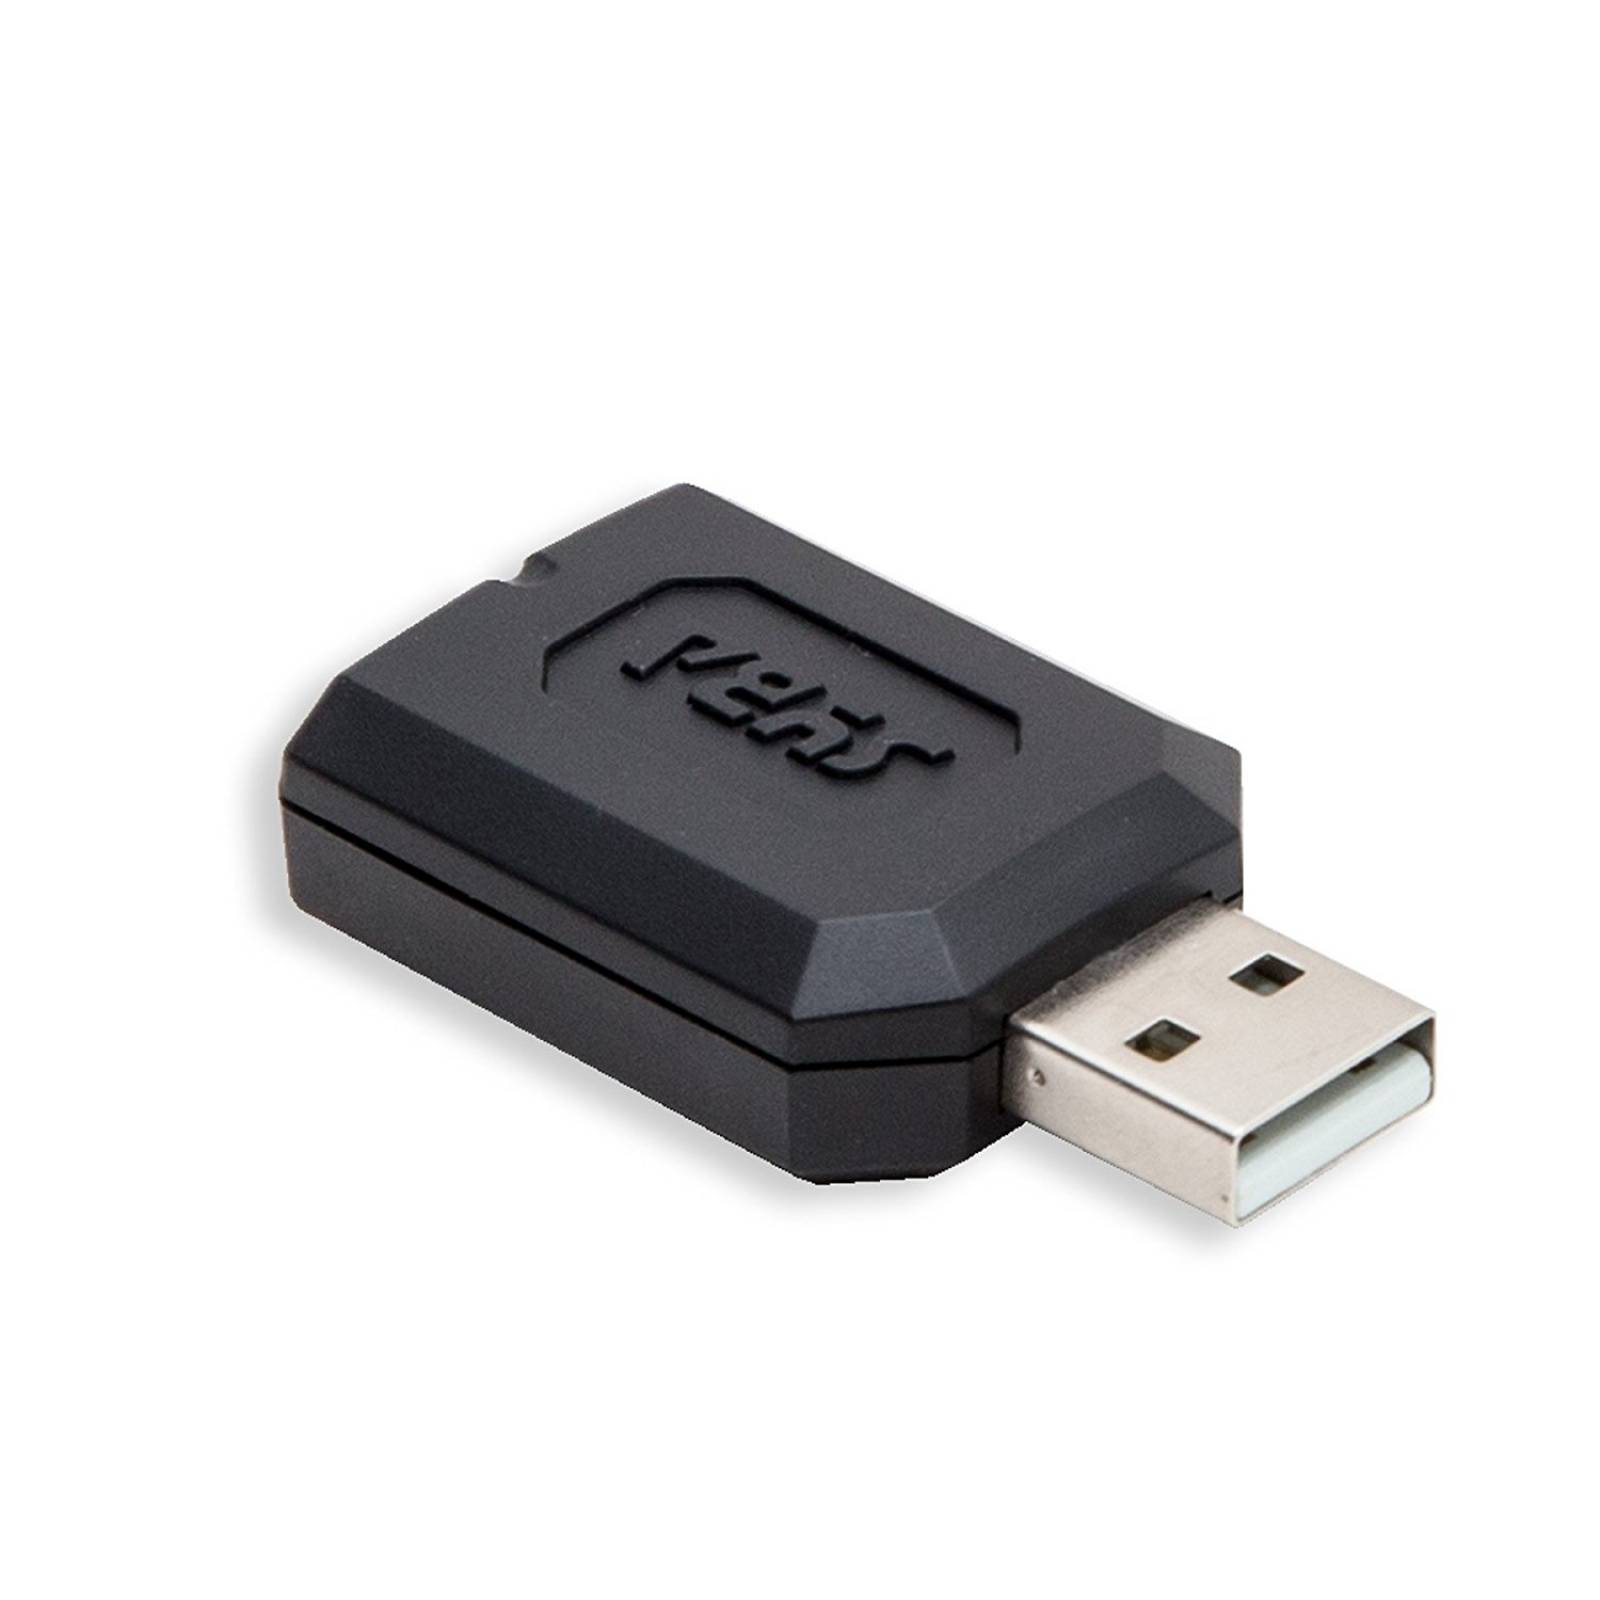 SYBA externo USB estéreo sonido adaptador Windows, Mac, Linu